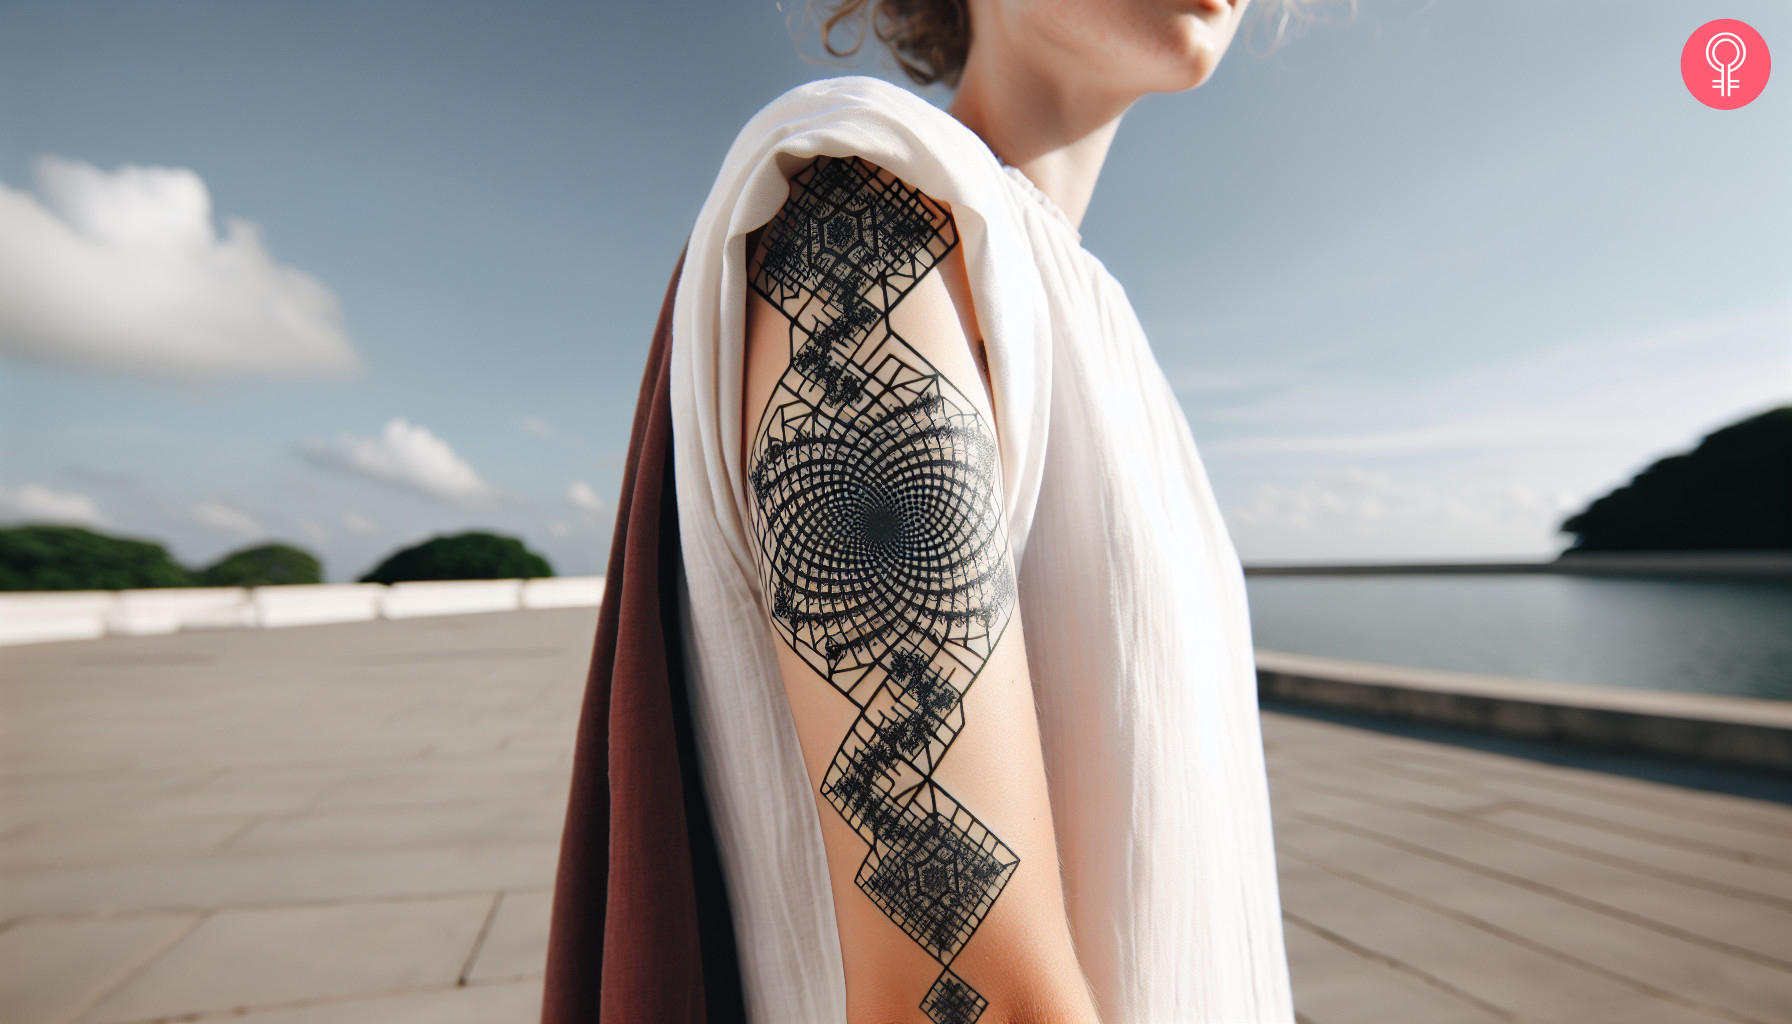 Fractal pattern tattoo on a woman’s arm